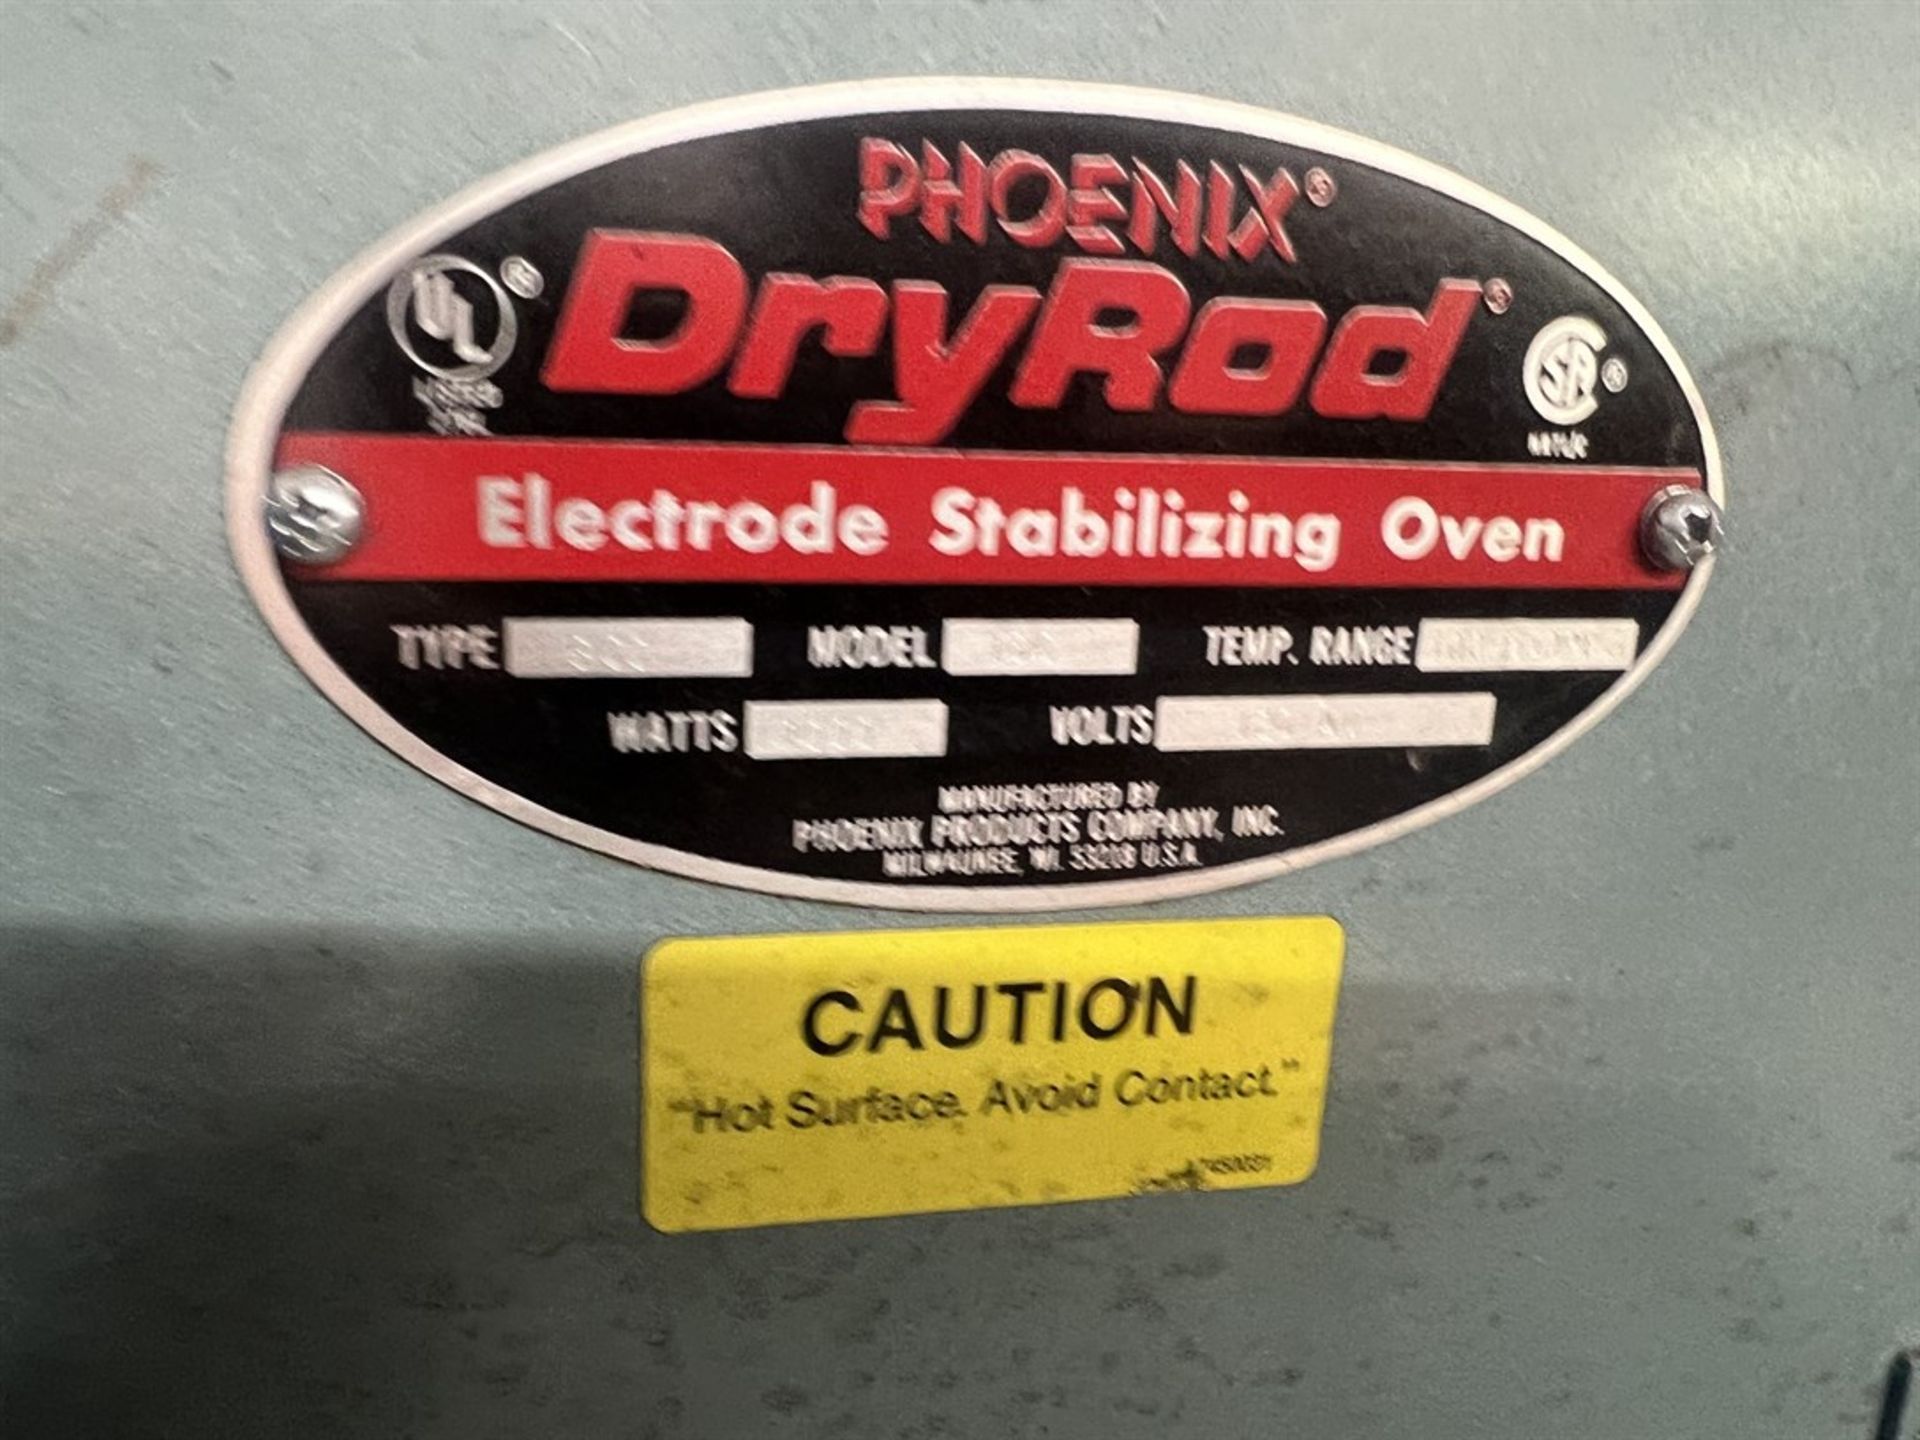 PHOENIX DryRod 16C Electrode Stabilizing Oven - Image 2 of 3